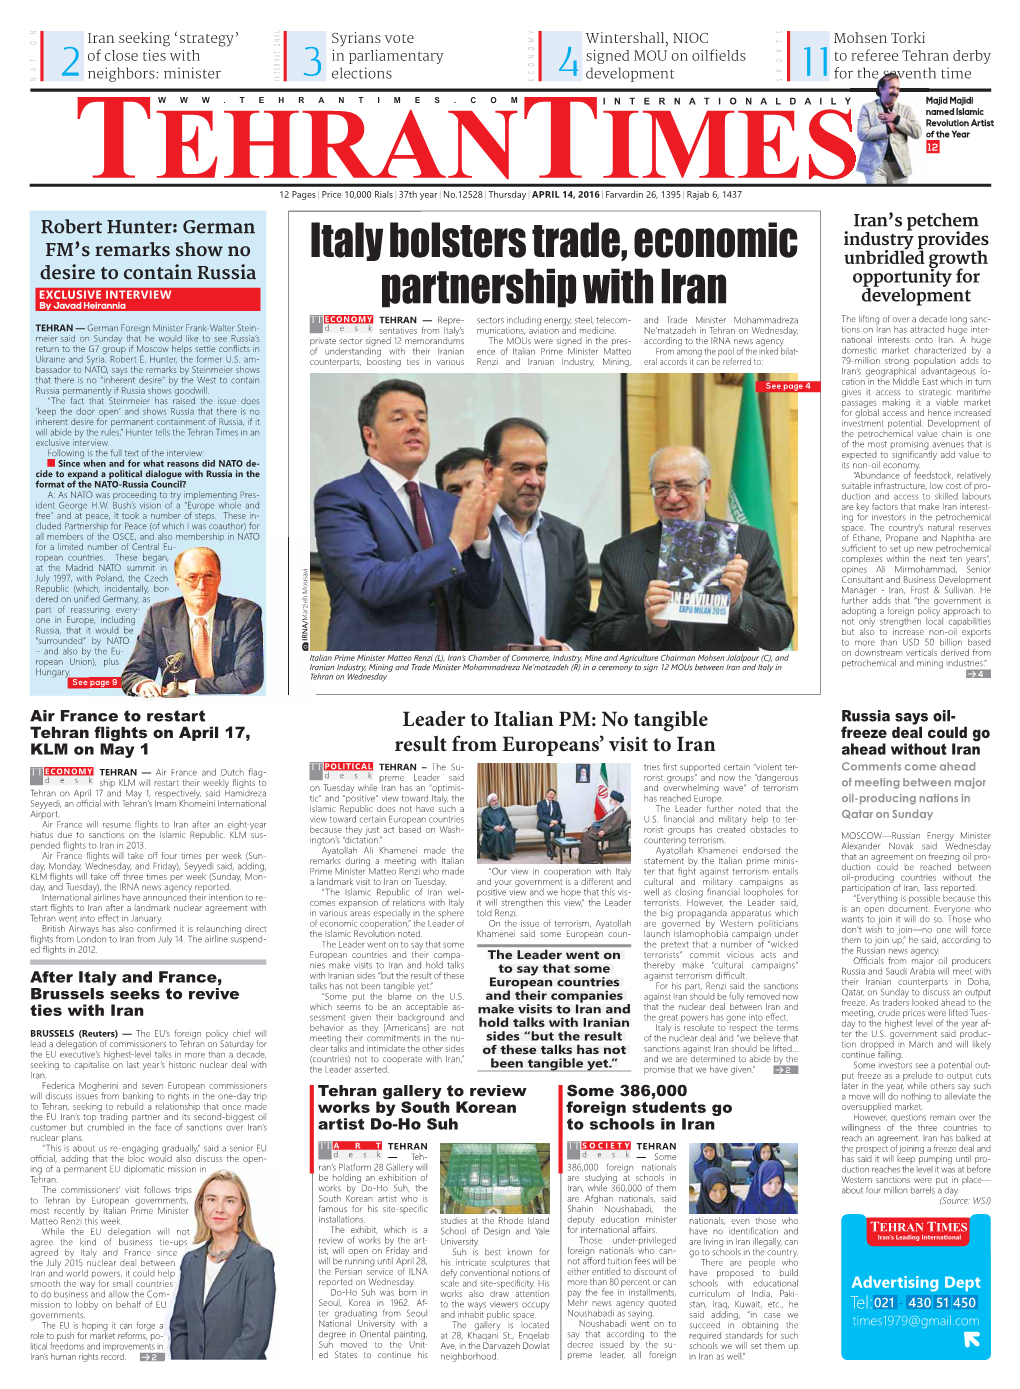 Italy Bolsters Trade, Economic Partnership with Iran